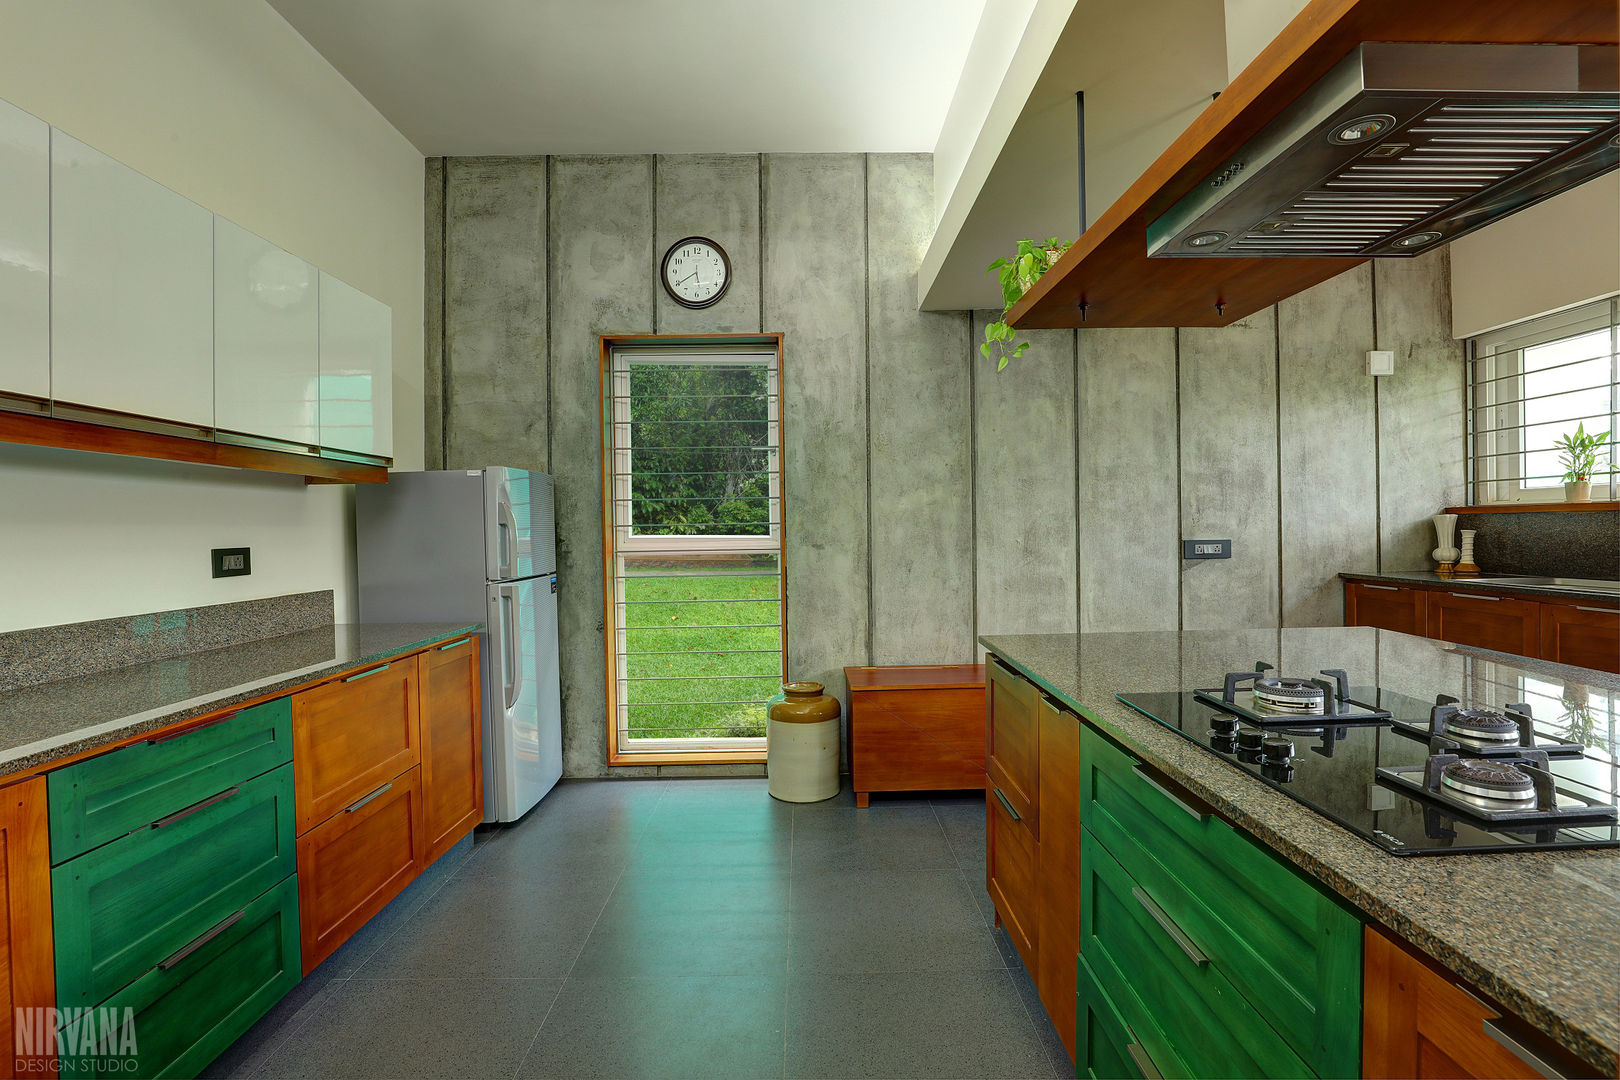 Tropical home 1, Studio Nirvana Studio Nirvana Tropical style kitchen cement wall,cement,tropical